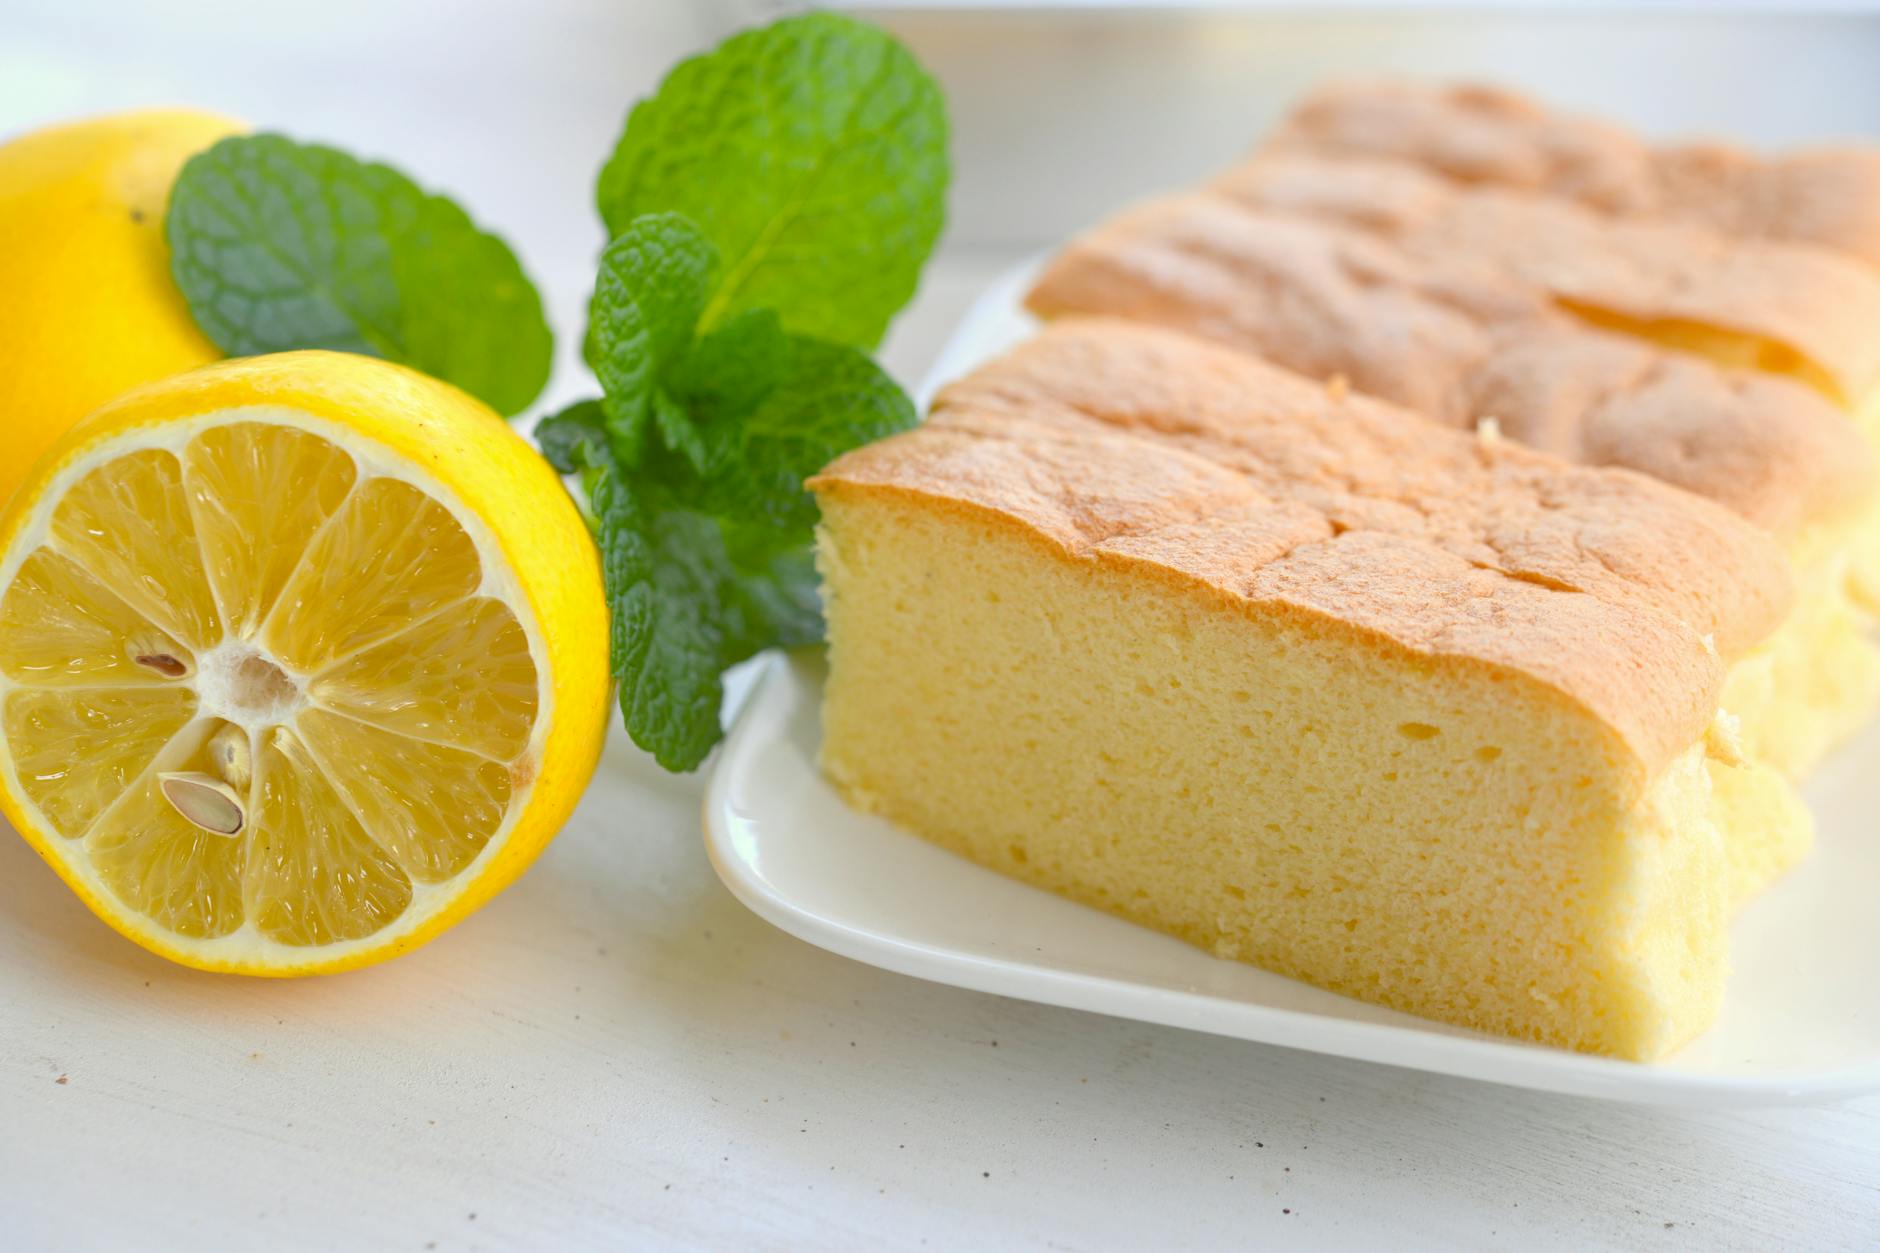 close up view of sliced sponge cake on a plate beside a lemon